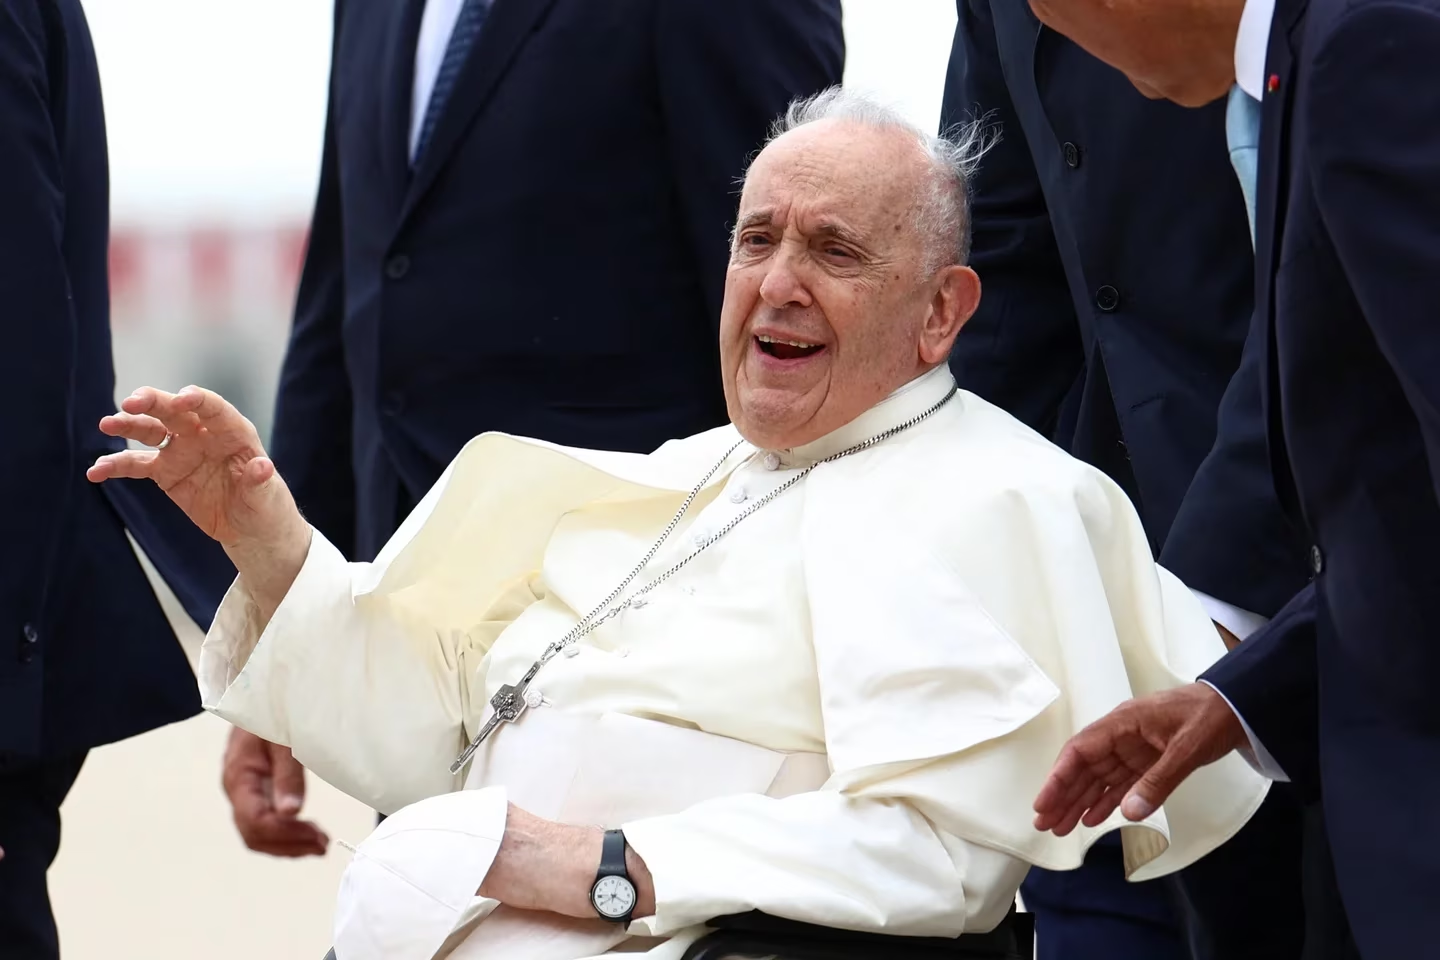 El papa Francisco llegó a Portugal para participar en la Jornada Mundial de la Juventud 